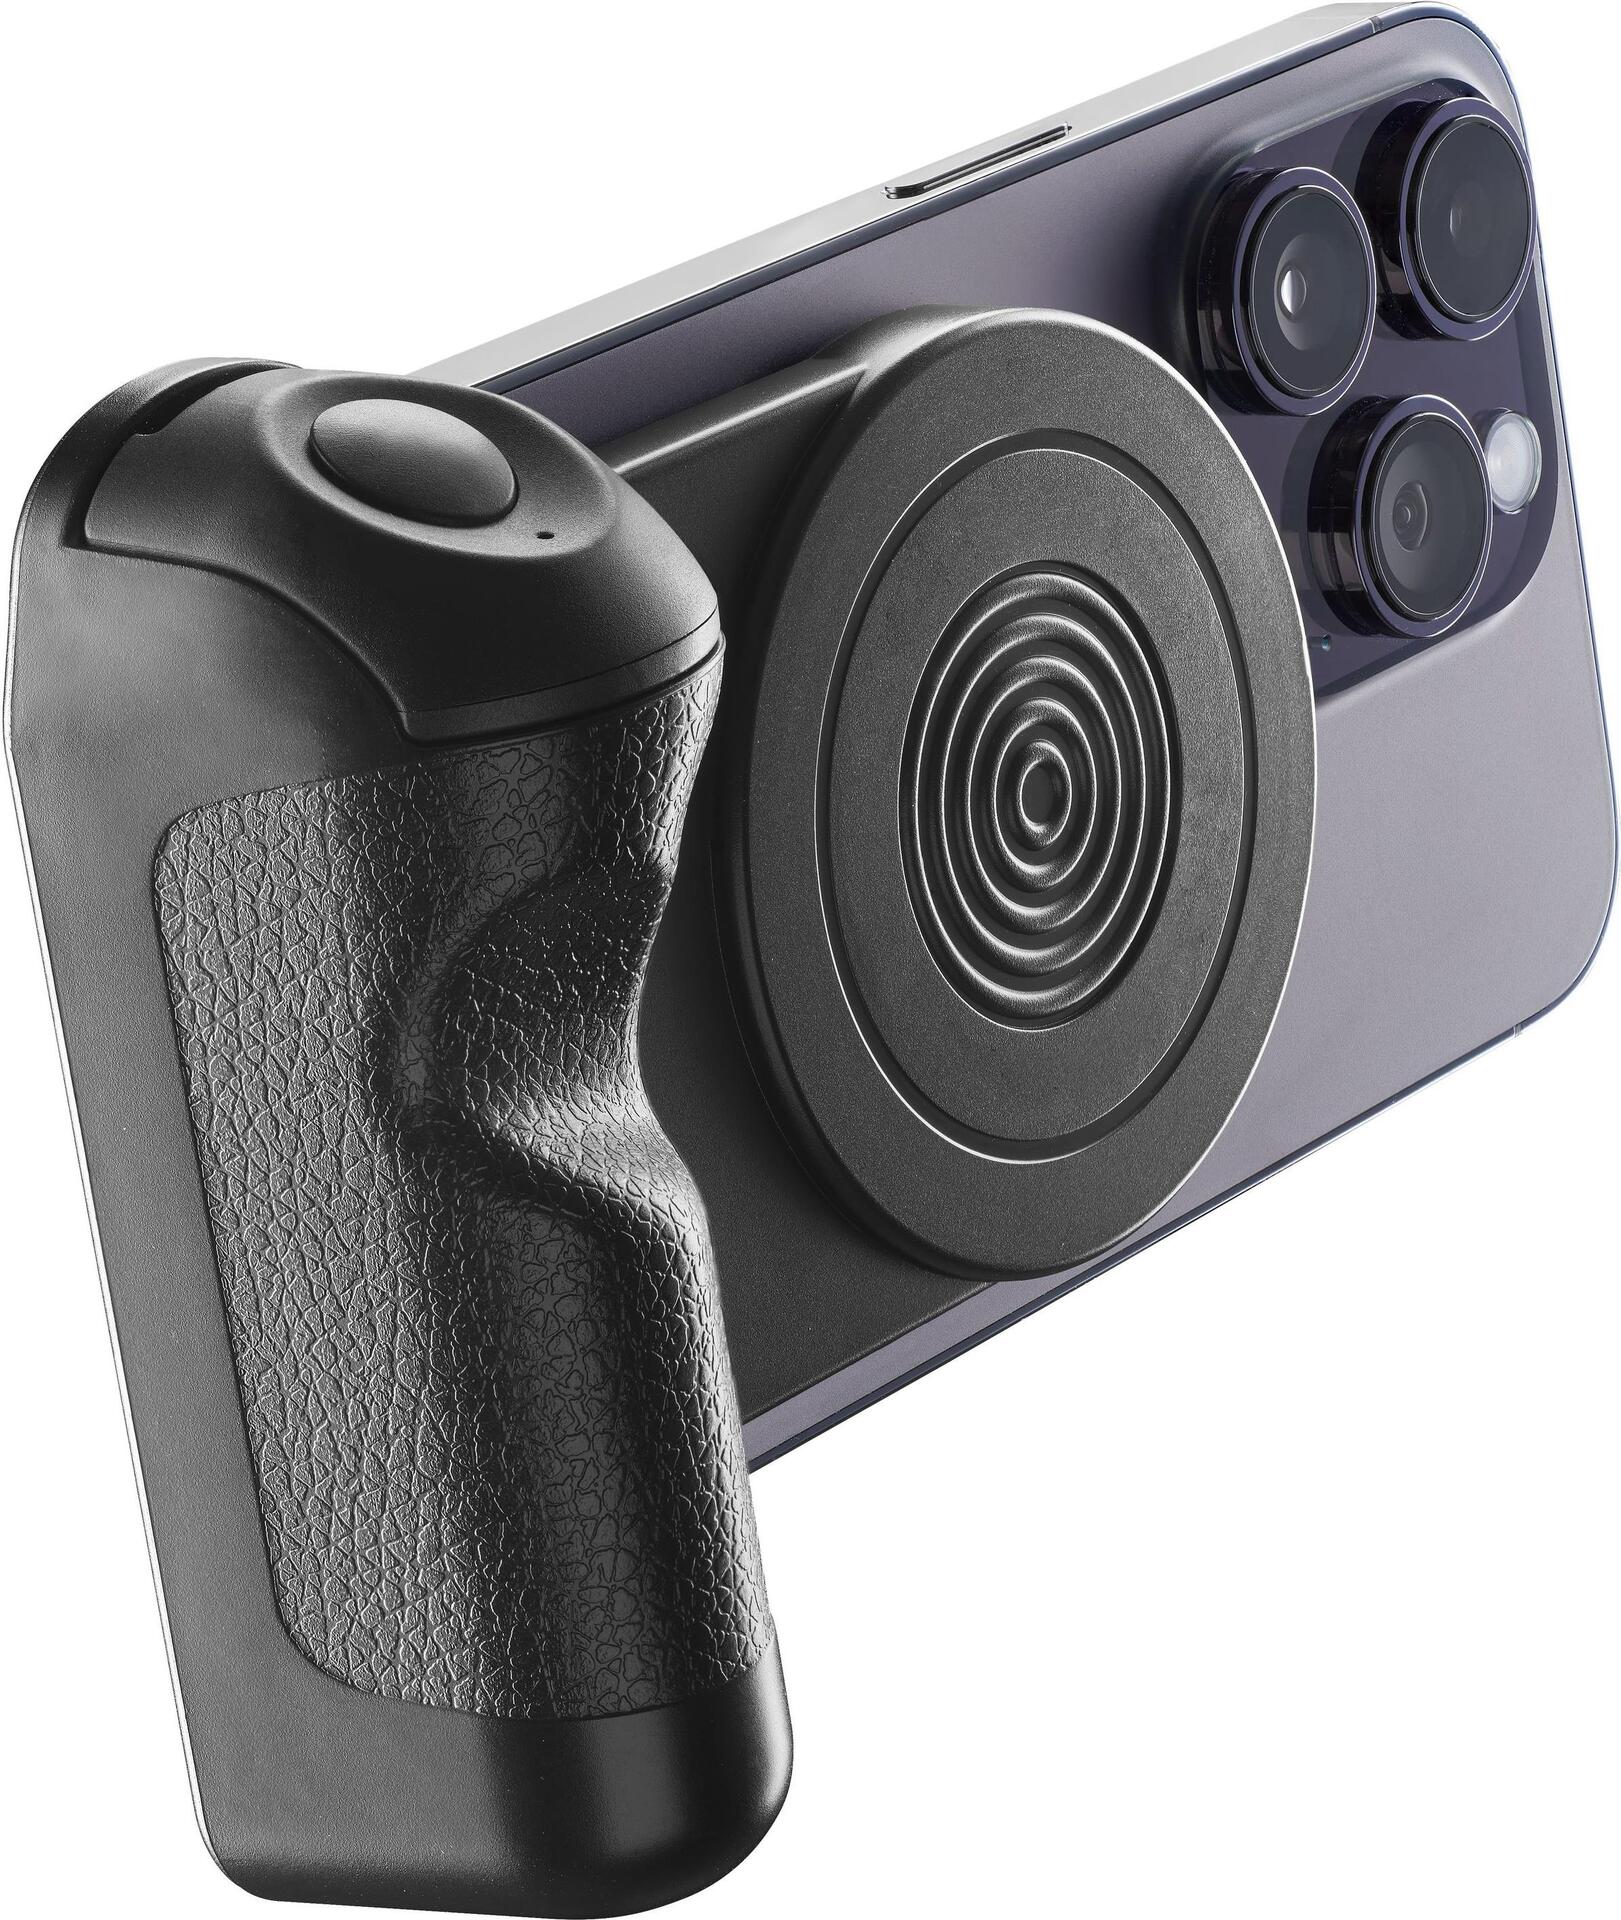 Cellularline Pics Mag Universal Bluetooth Selfie Holder Black (PICSMAGK)